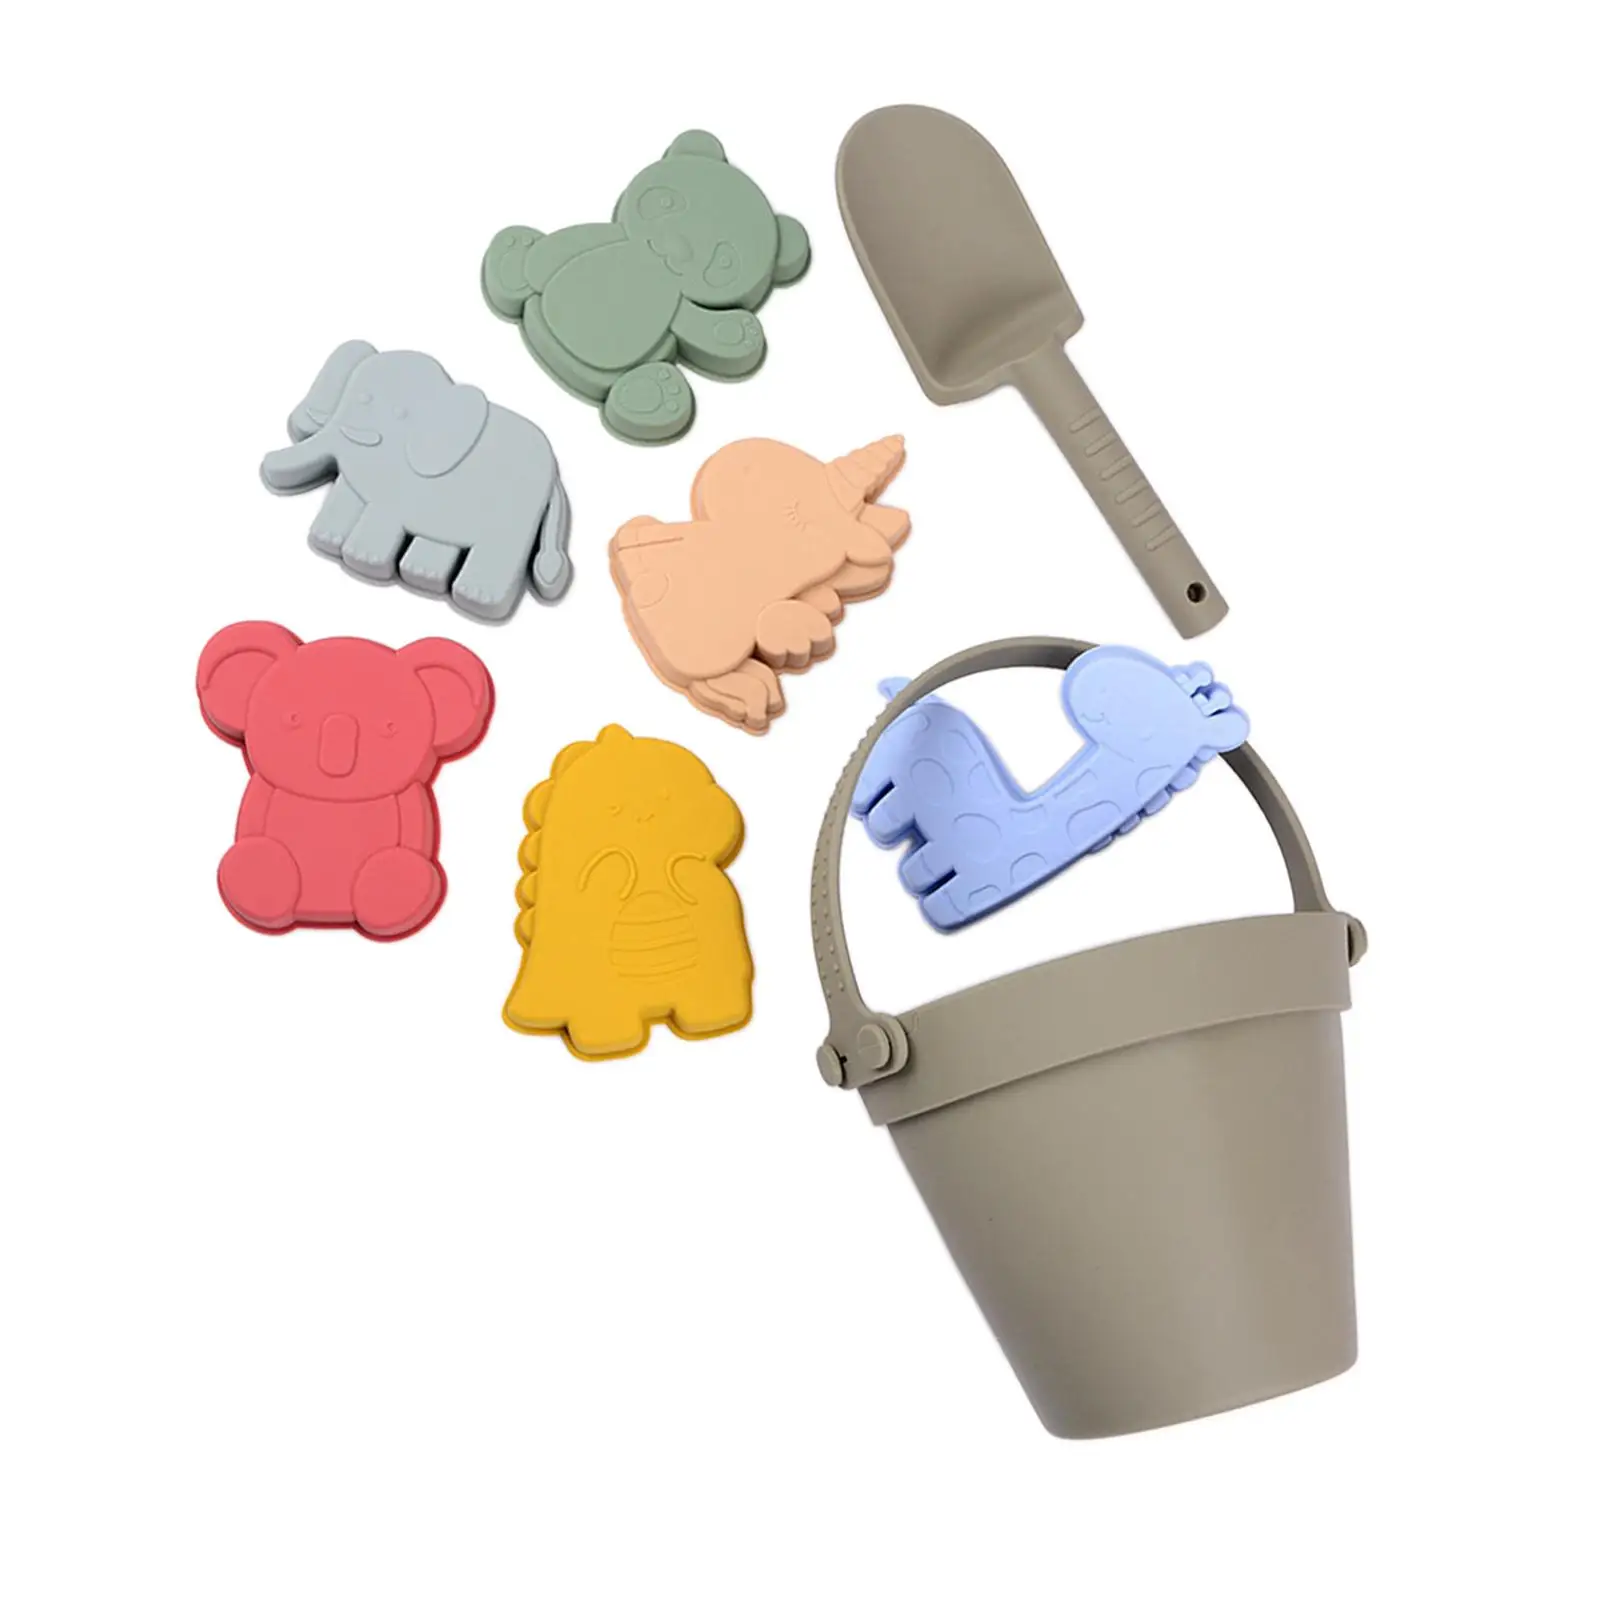 8x Beach Bucket and Spade Set Silicone Beach Toys for Beach Bathtubs Travel